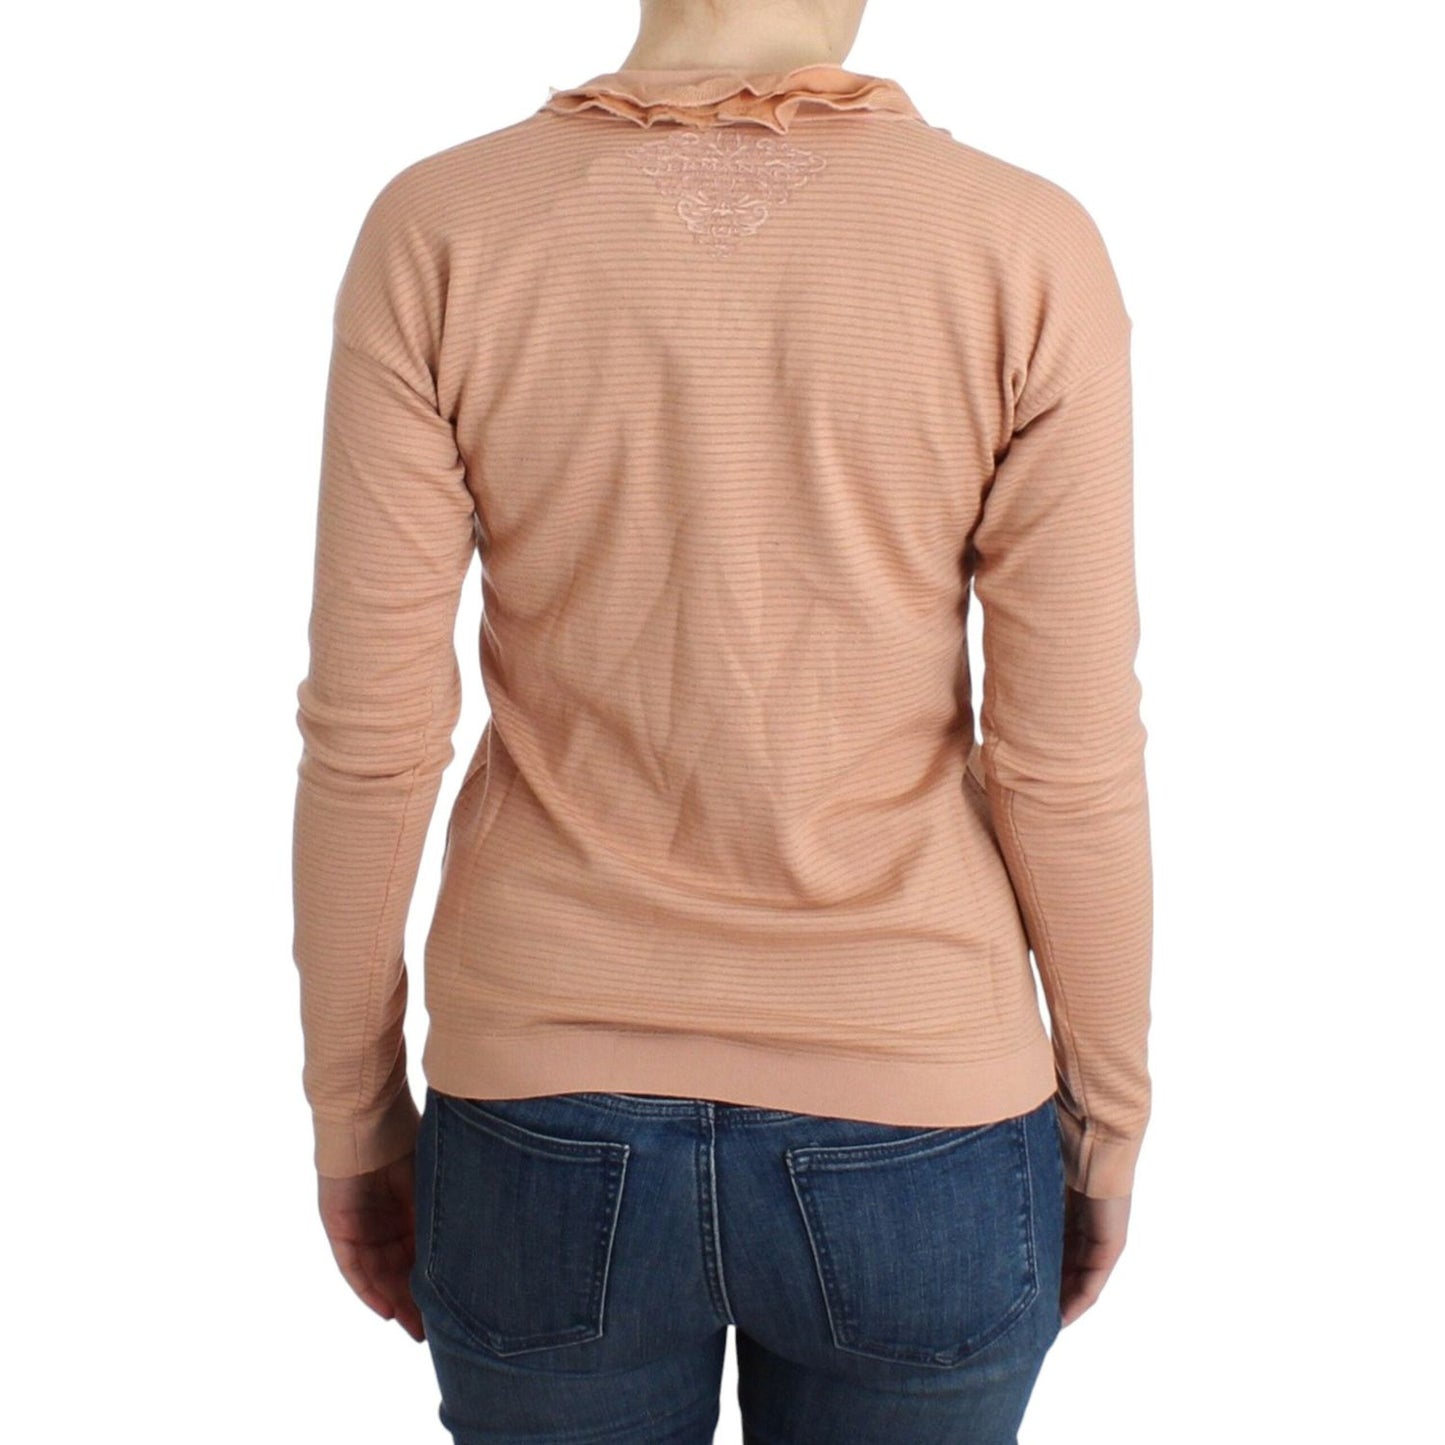 Ermanno Scervino Chic Striped Wool Blend Orange Sweater orange-wool-blend-striped-long-sleeve-top